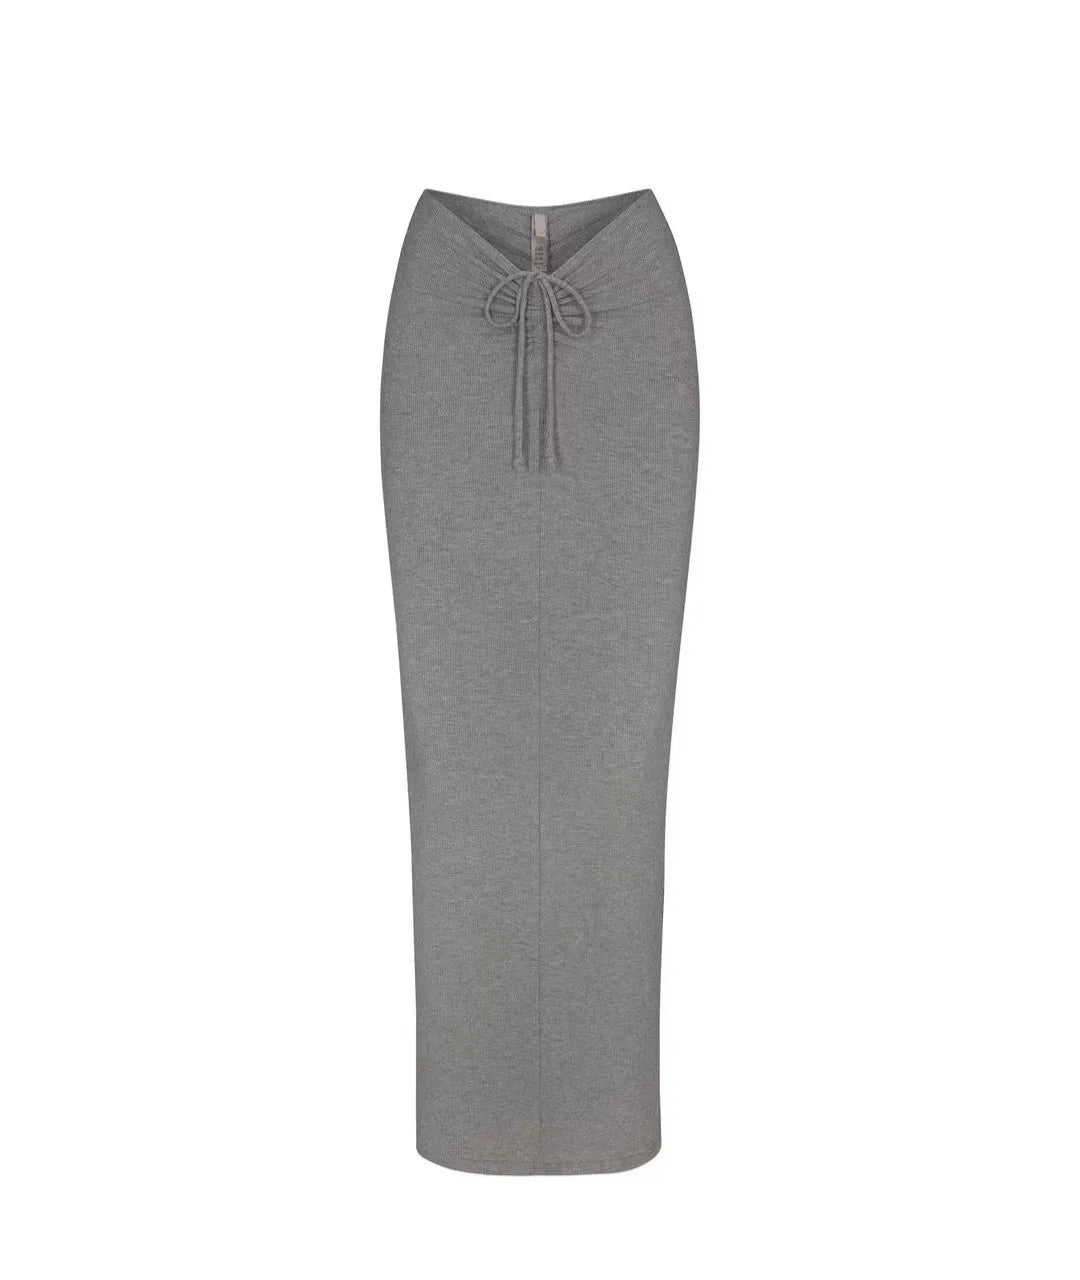 Kim Kardashian's Gray High-Waisted Mid-Length Skirt with Hip Wrap